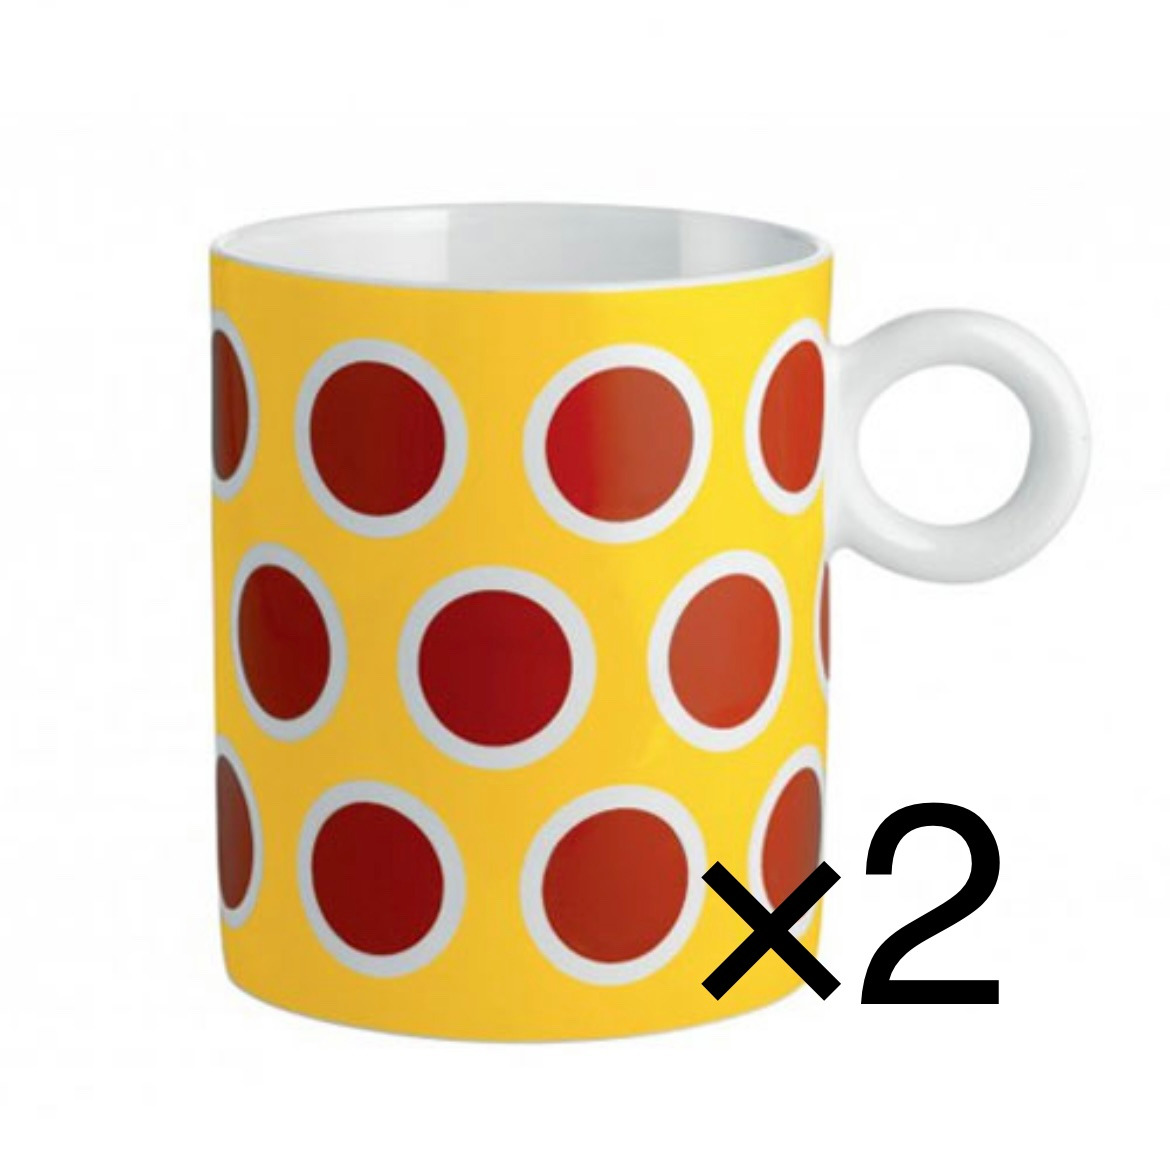 ALESSI Circus Mug Cup 2 set Marcel Wanders Design coffee Tea porcelain 350ml